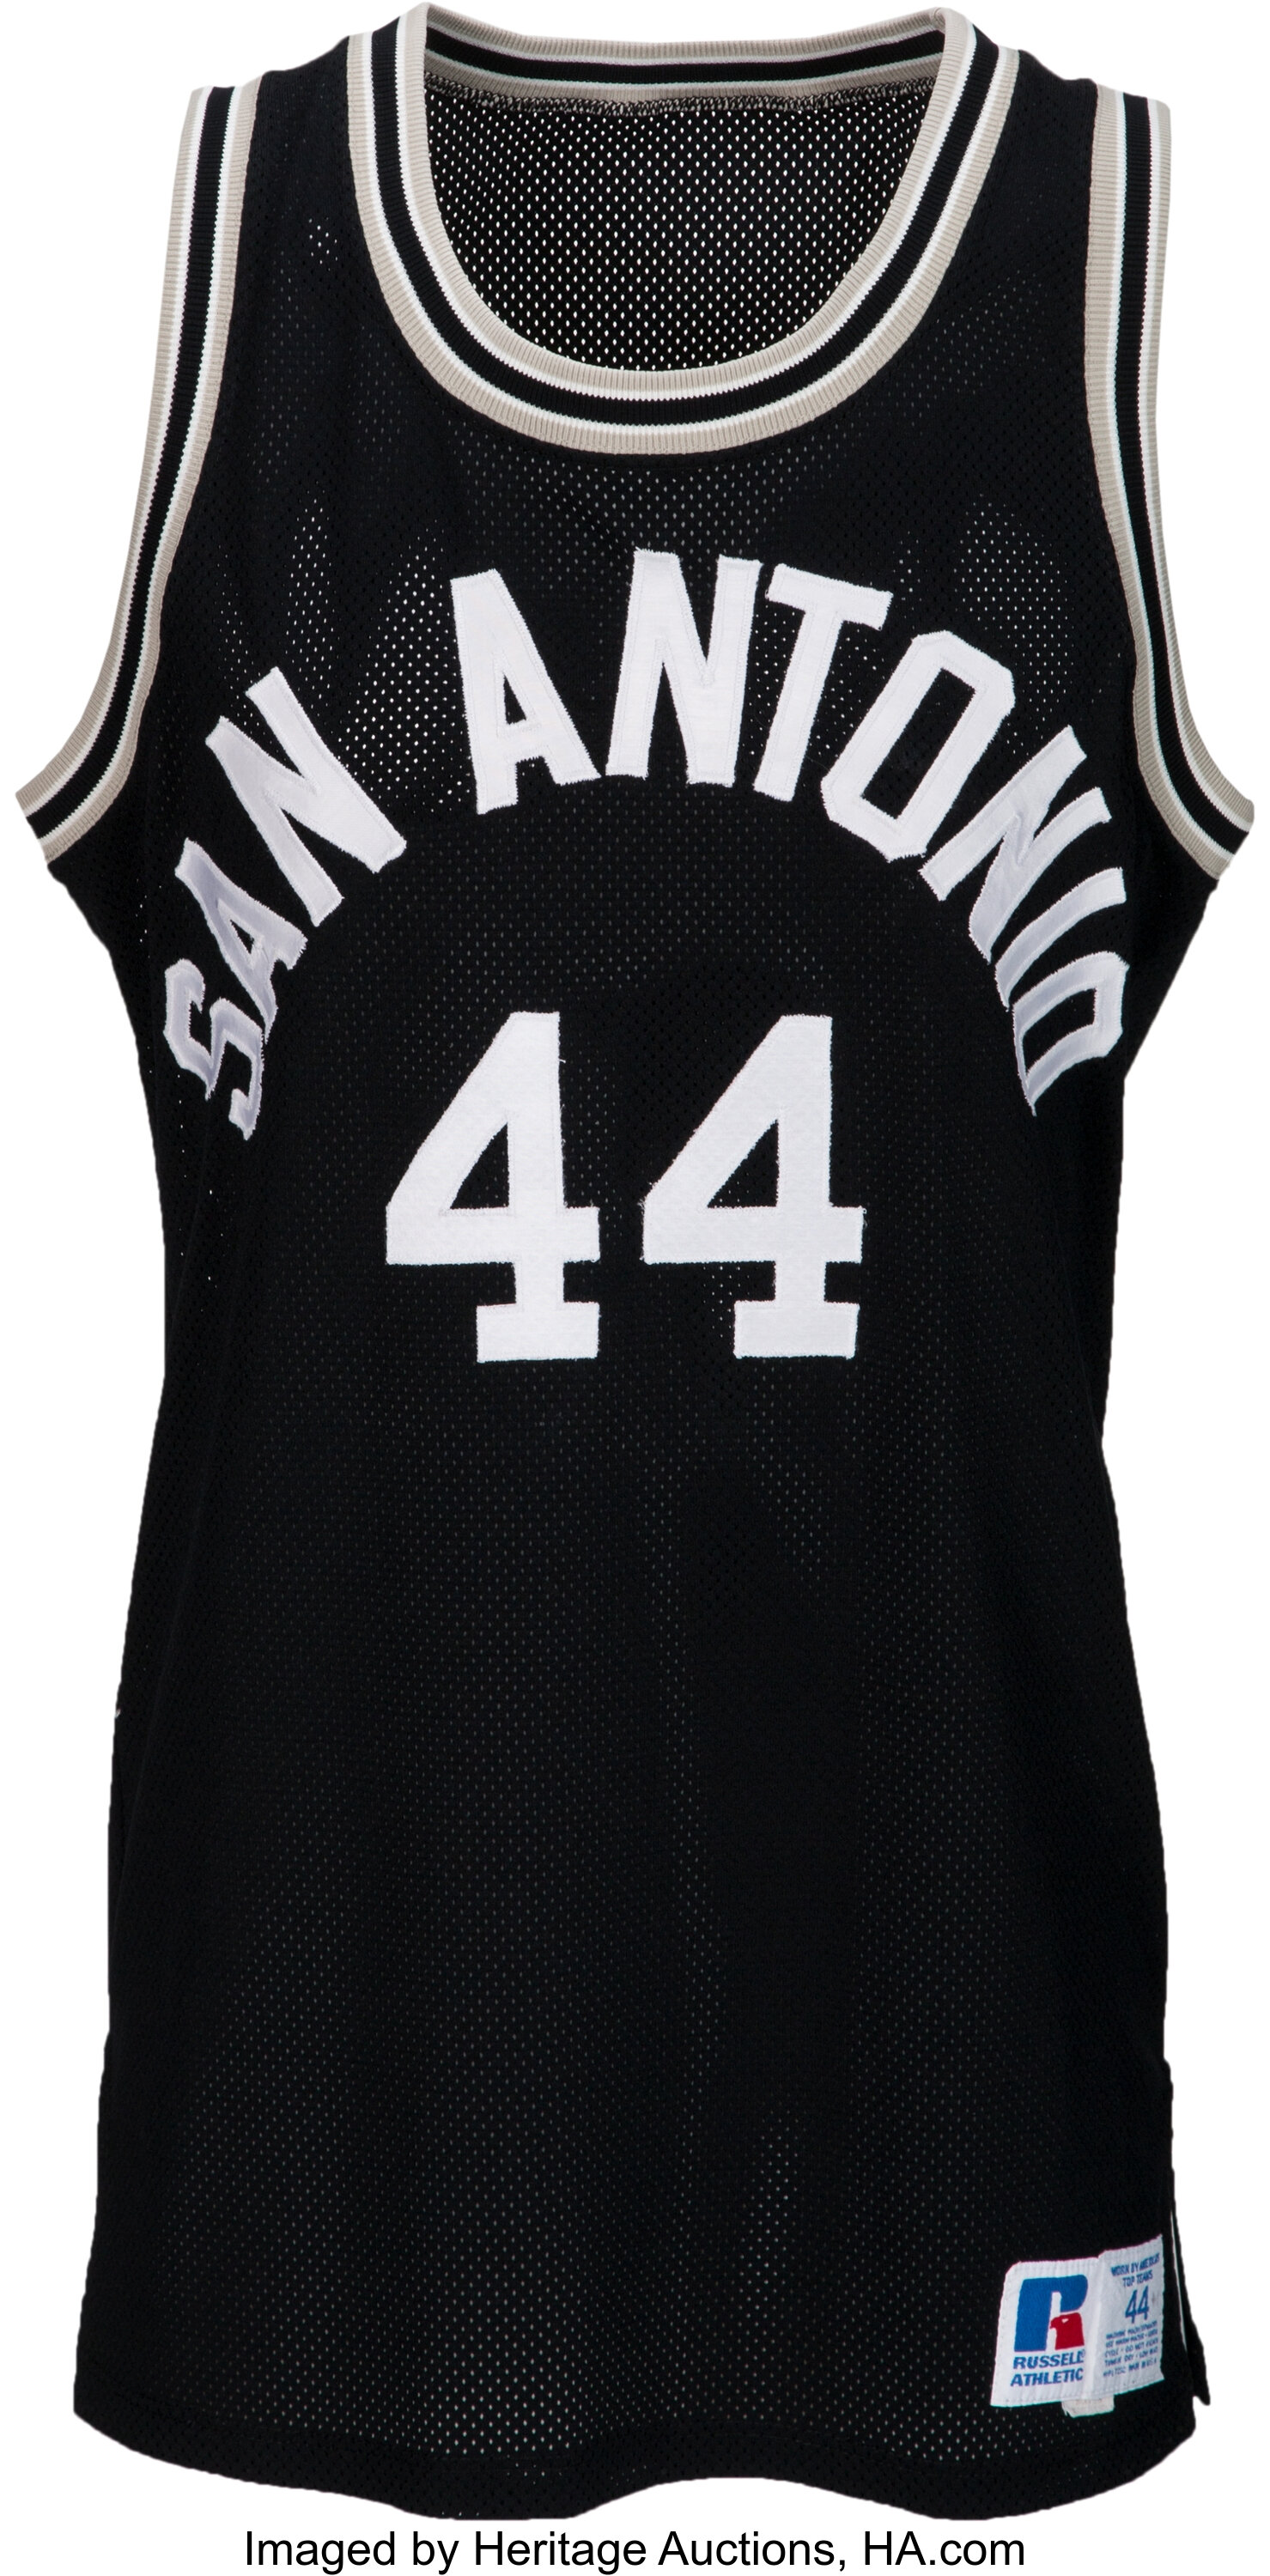 San Antonio Spurs Jersey History - Basketball Jersey Archive